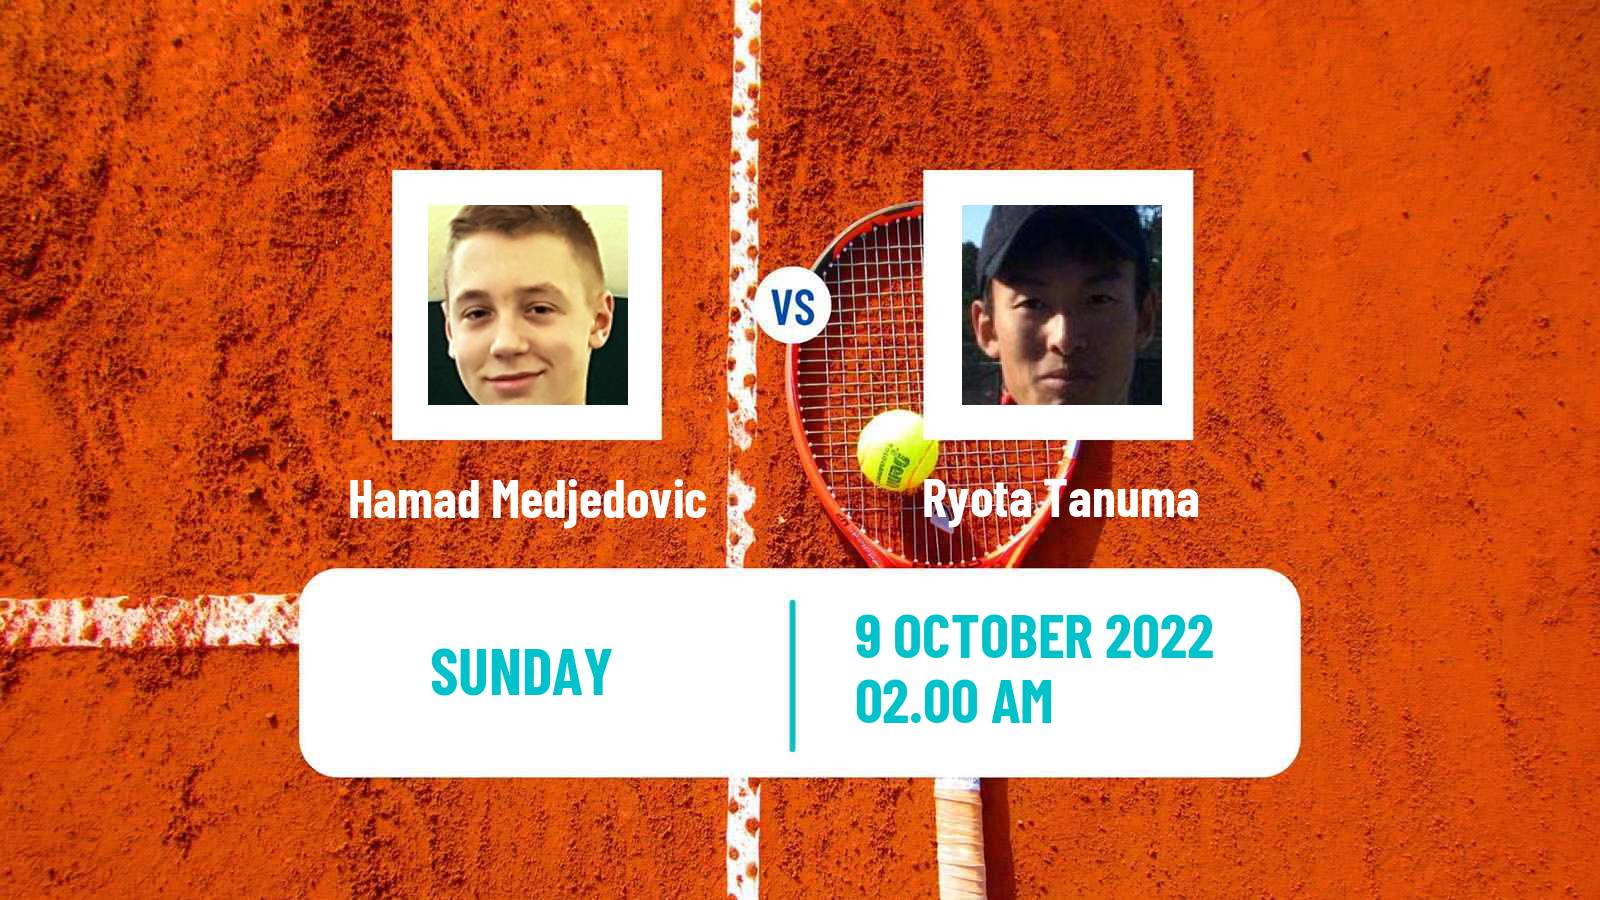 Tennis ATP Challenger Hamad Medjedovic - Ryota Tanuma